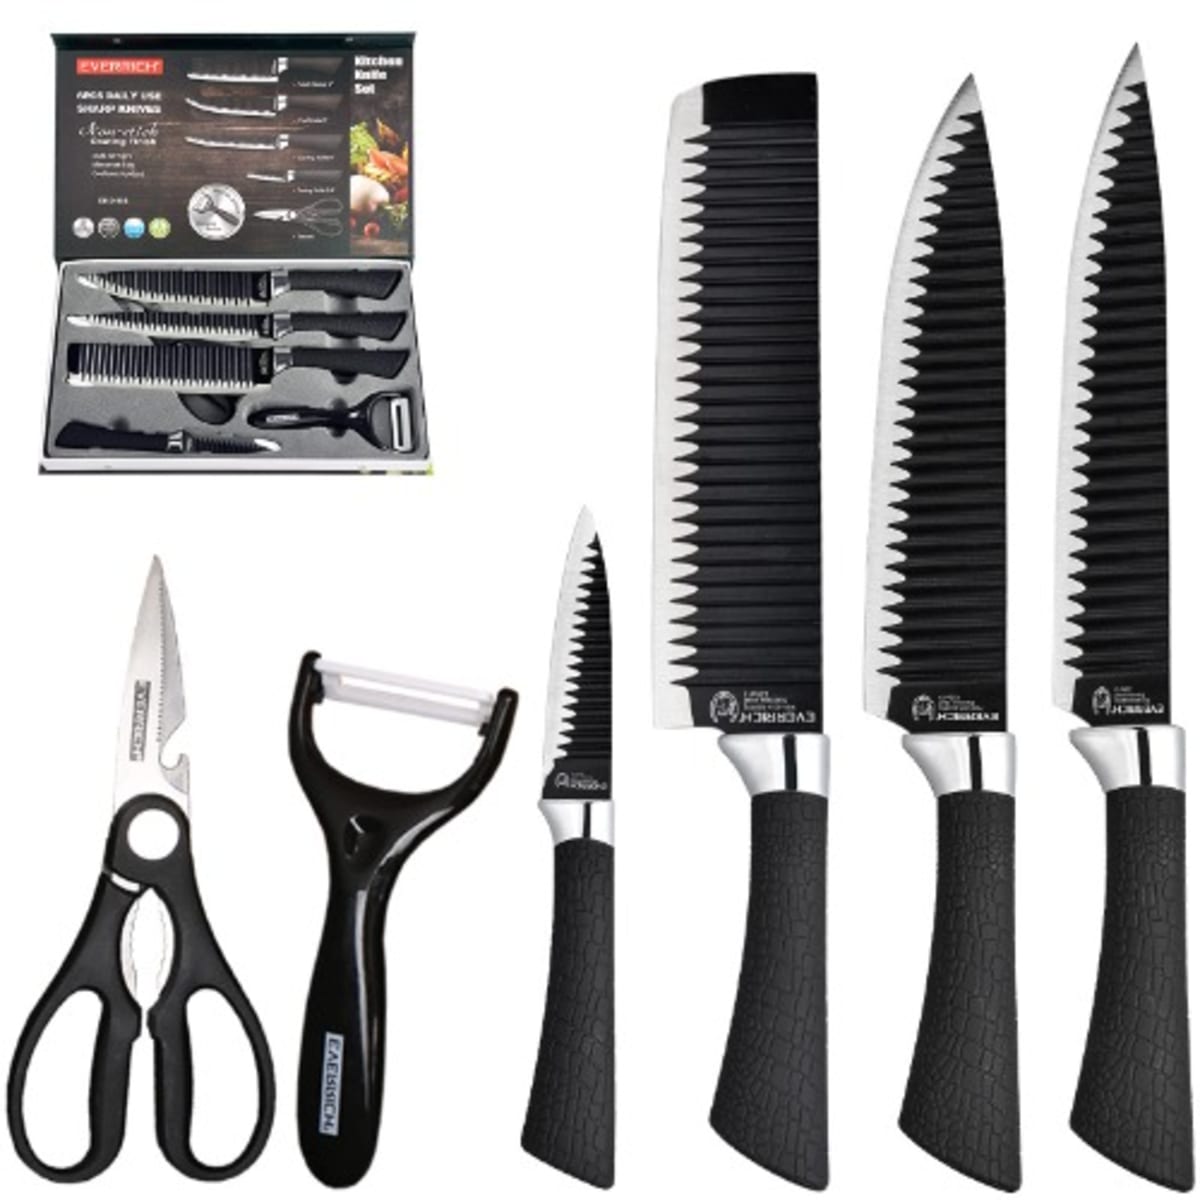 Everich Stainless Steel Kitchen Knife Set 6 Black - ER-0238A